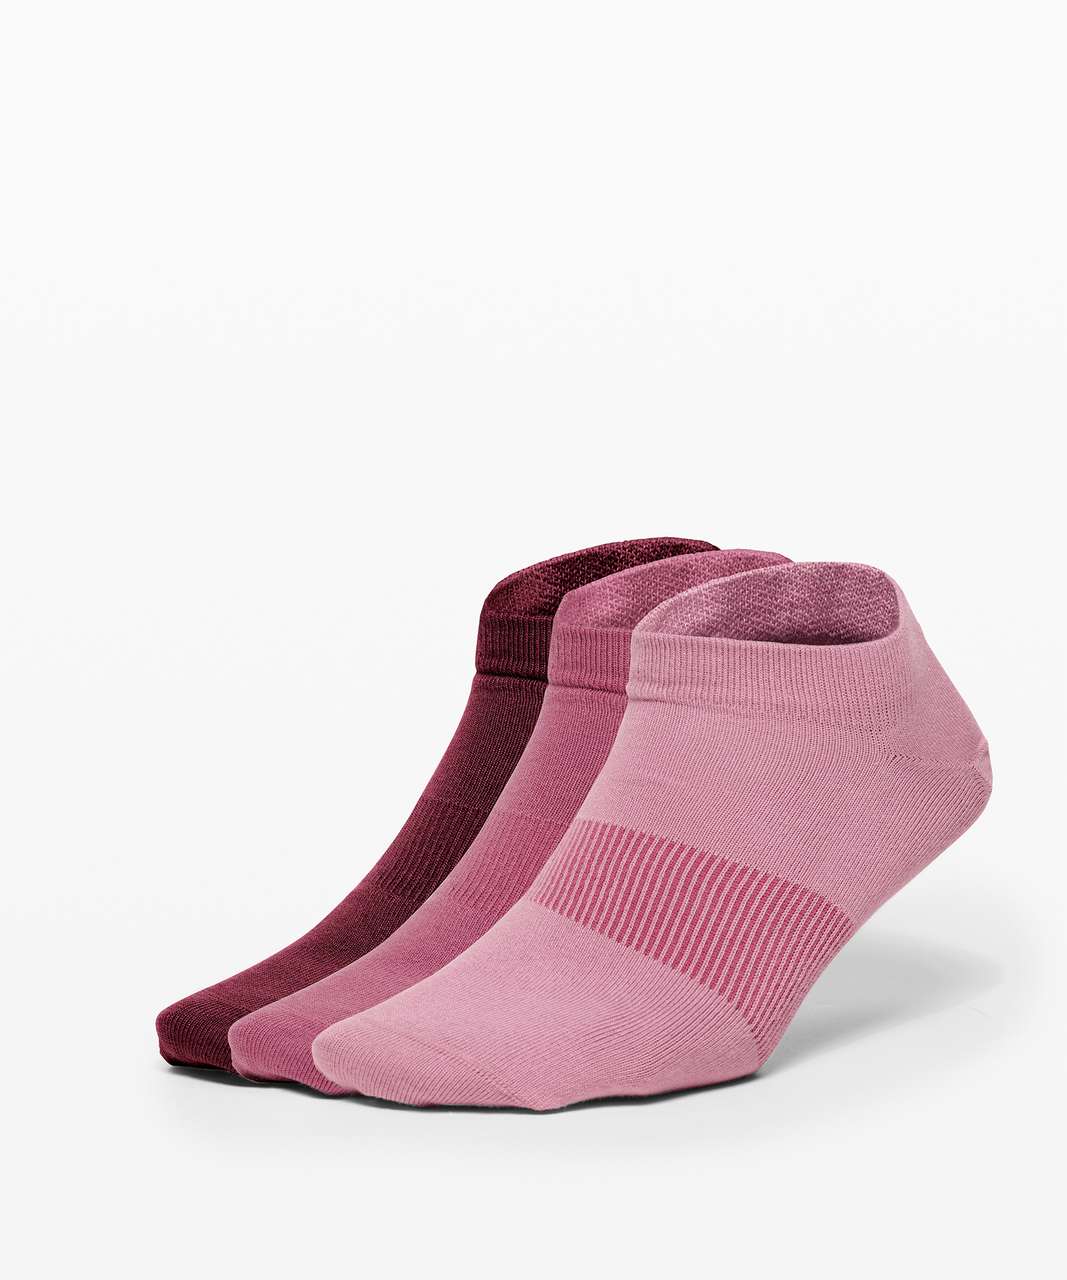 Lululemon On the Fly Sock *3-Pack - Pink Taupe / Moss Rose / Garnet